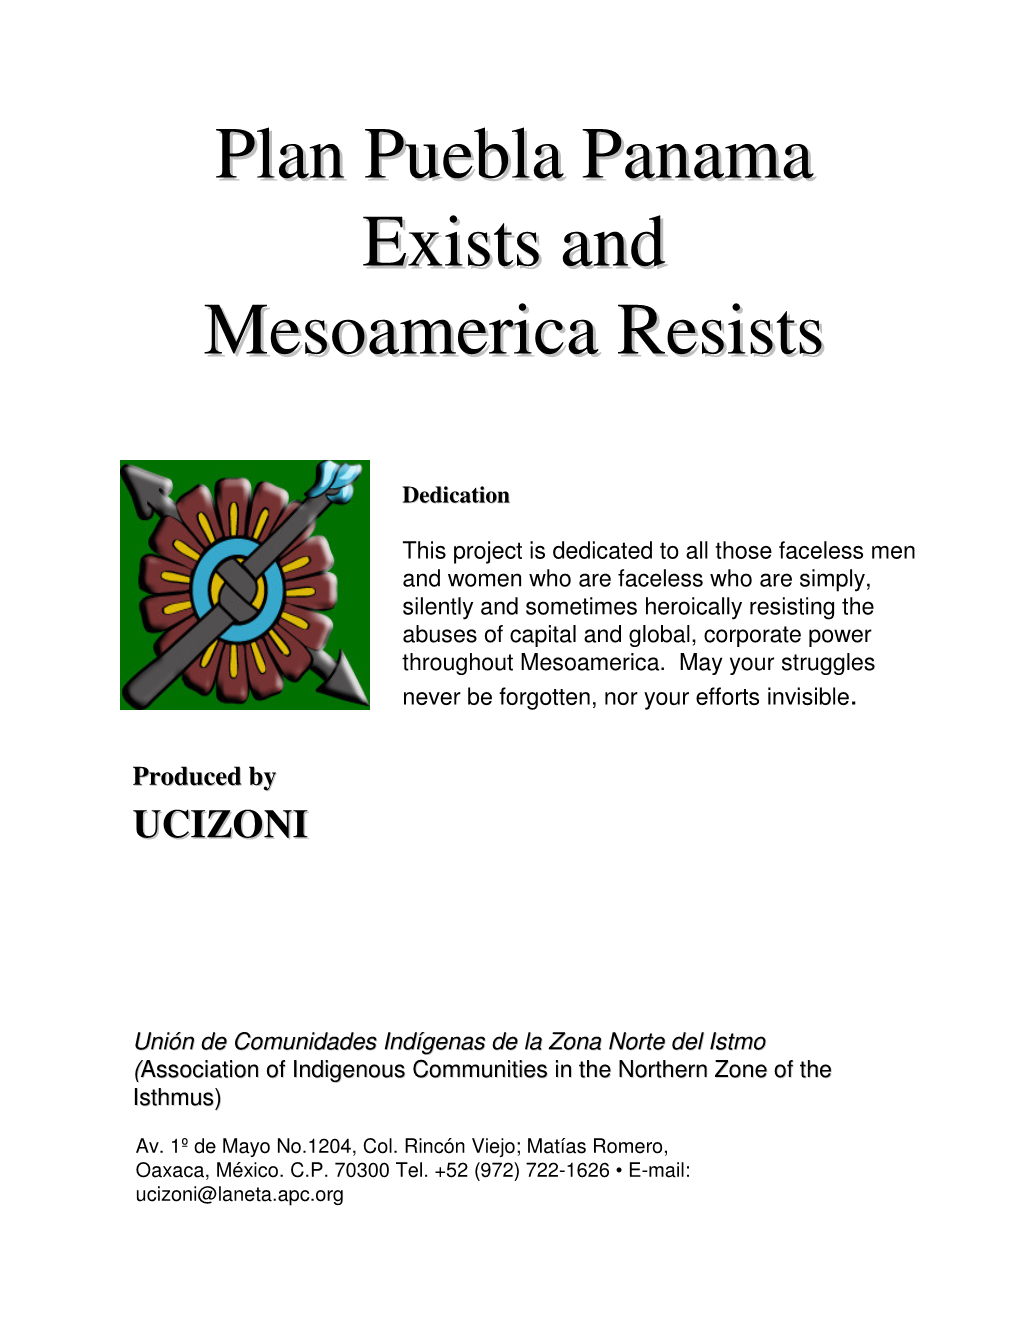 Plan Puebla Panama Exists and Mesoamerica Resists